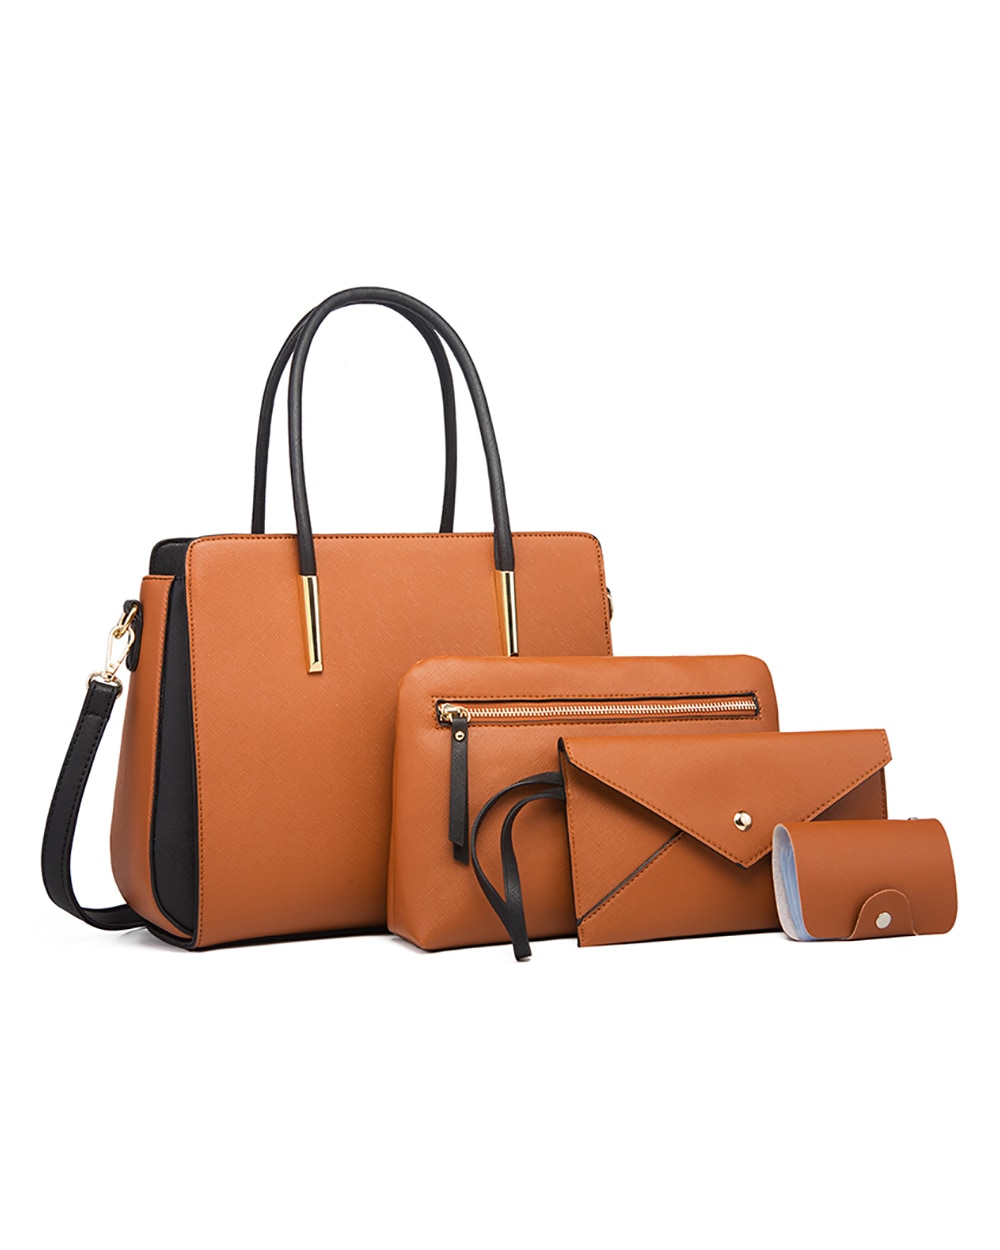 4 piece luxury brown bag set